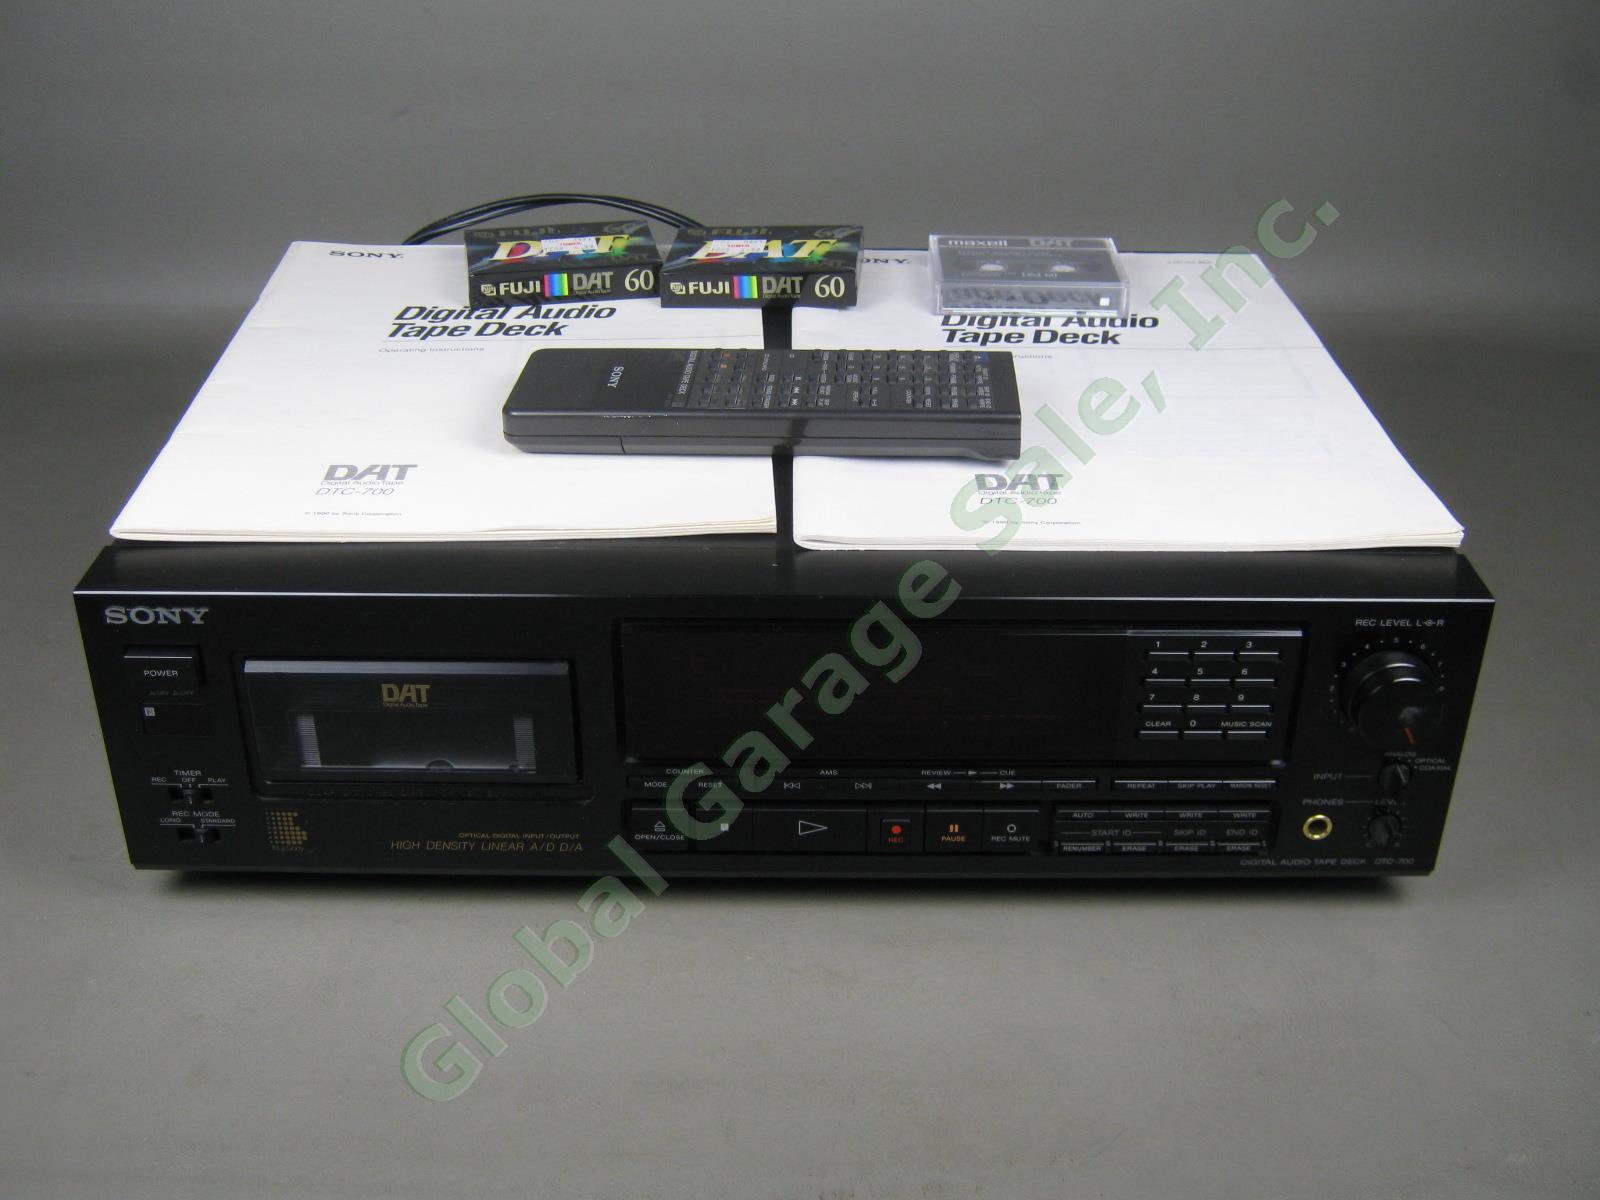 Sony DTC-700 DAT Digital Audio Tape Deck Recorder RM-D55A Remote Manual Bundle